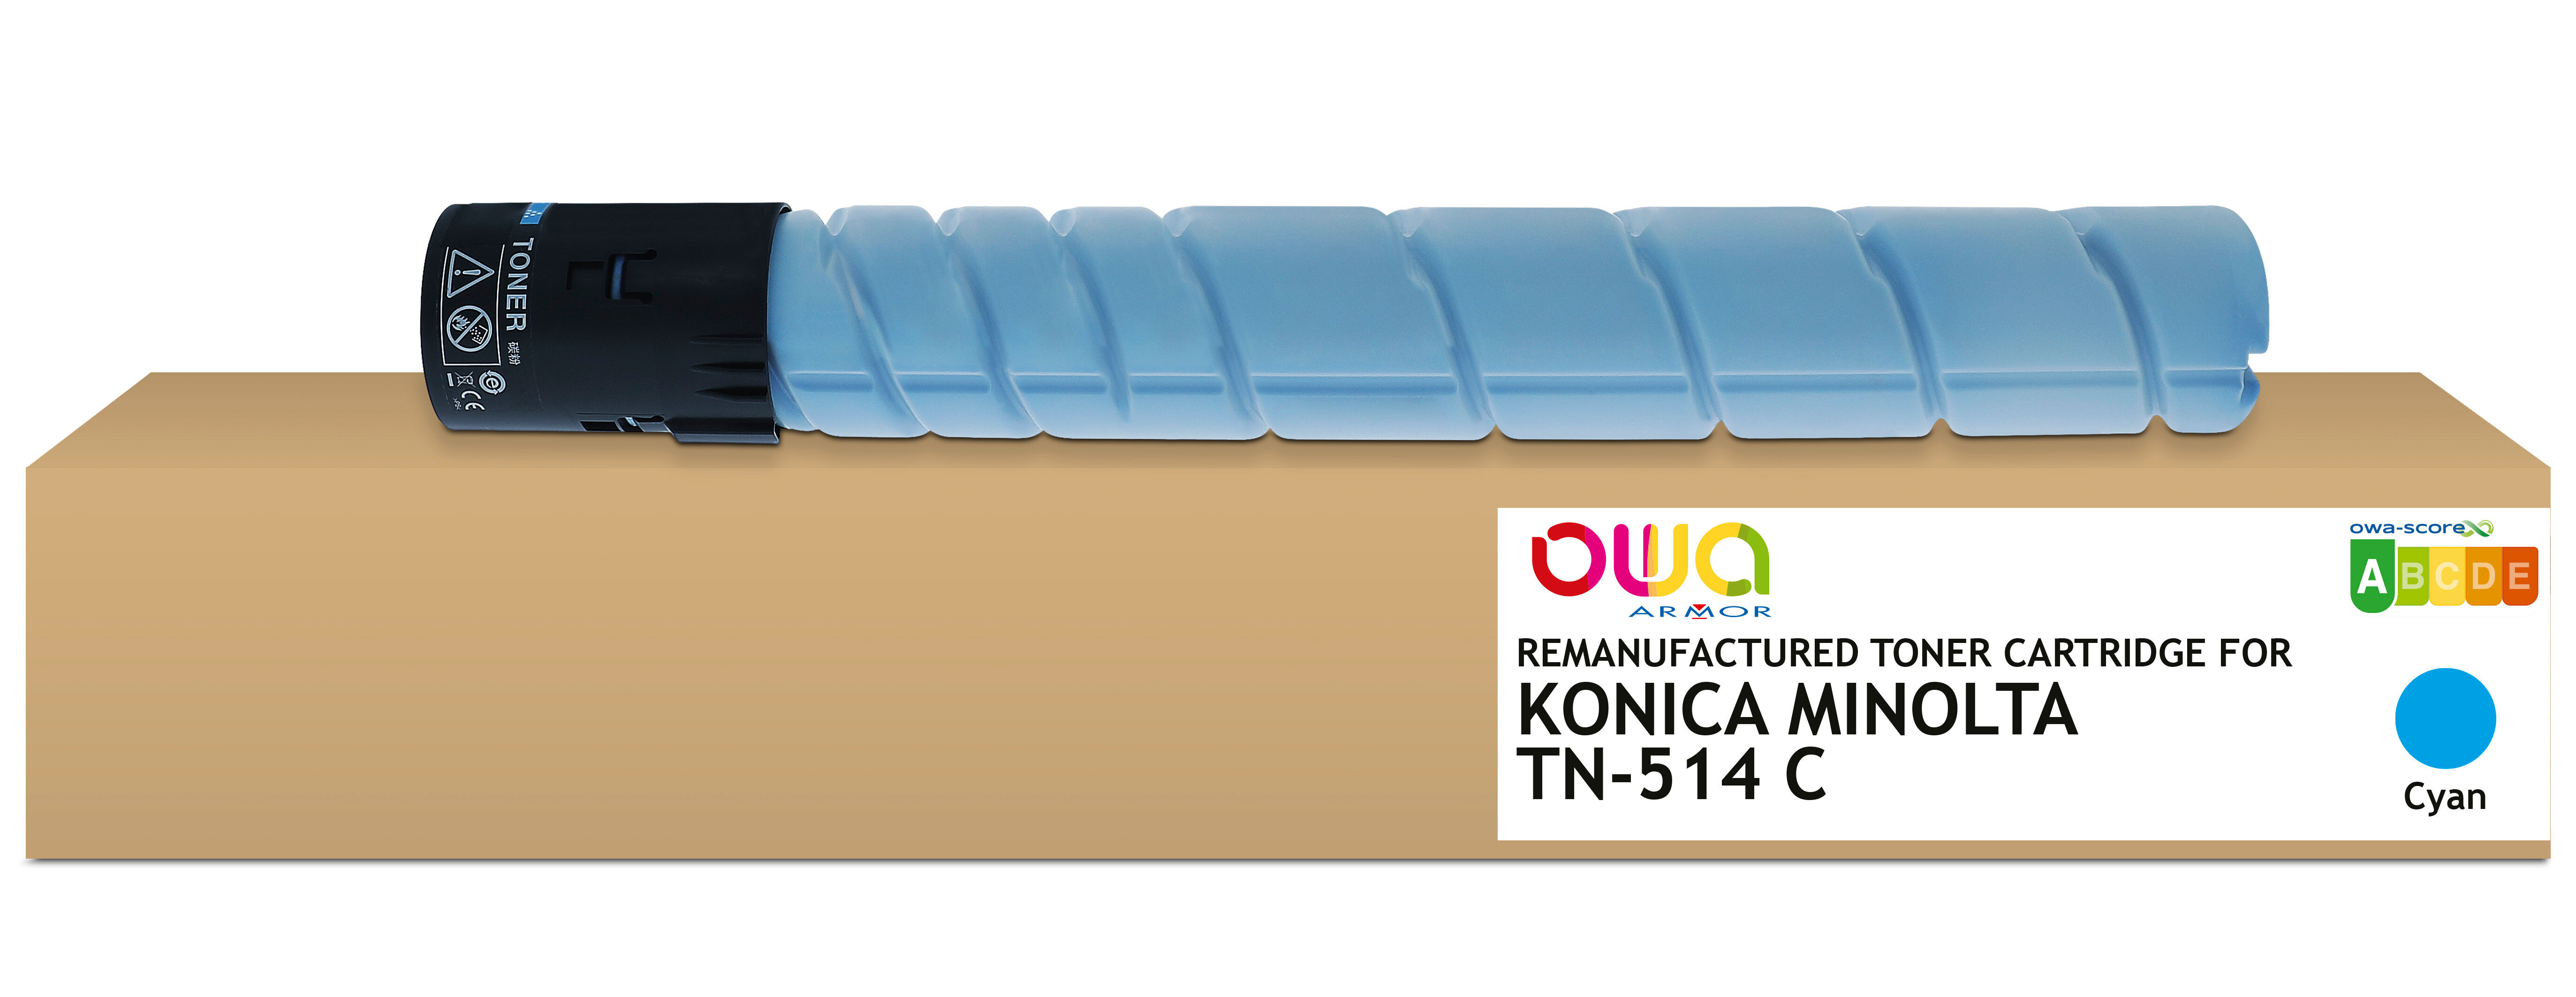 Toner remanufacturé OWA - standard - Cyan - pour KONICA MINOLTA TN-514 C, DEVELOP A9E84D0, OLIVETTI B1207